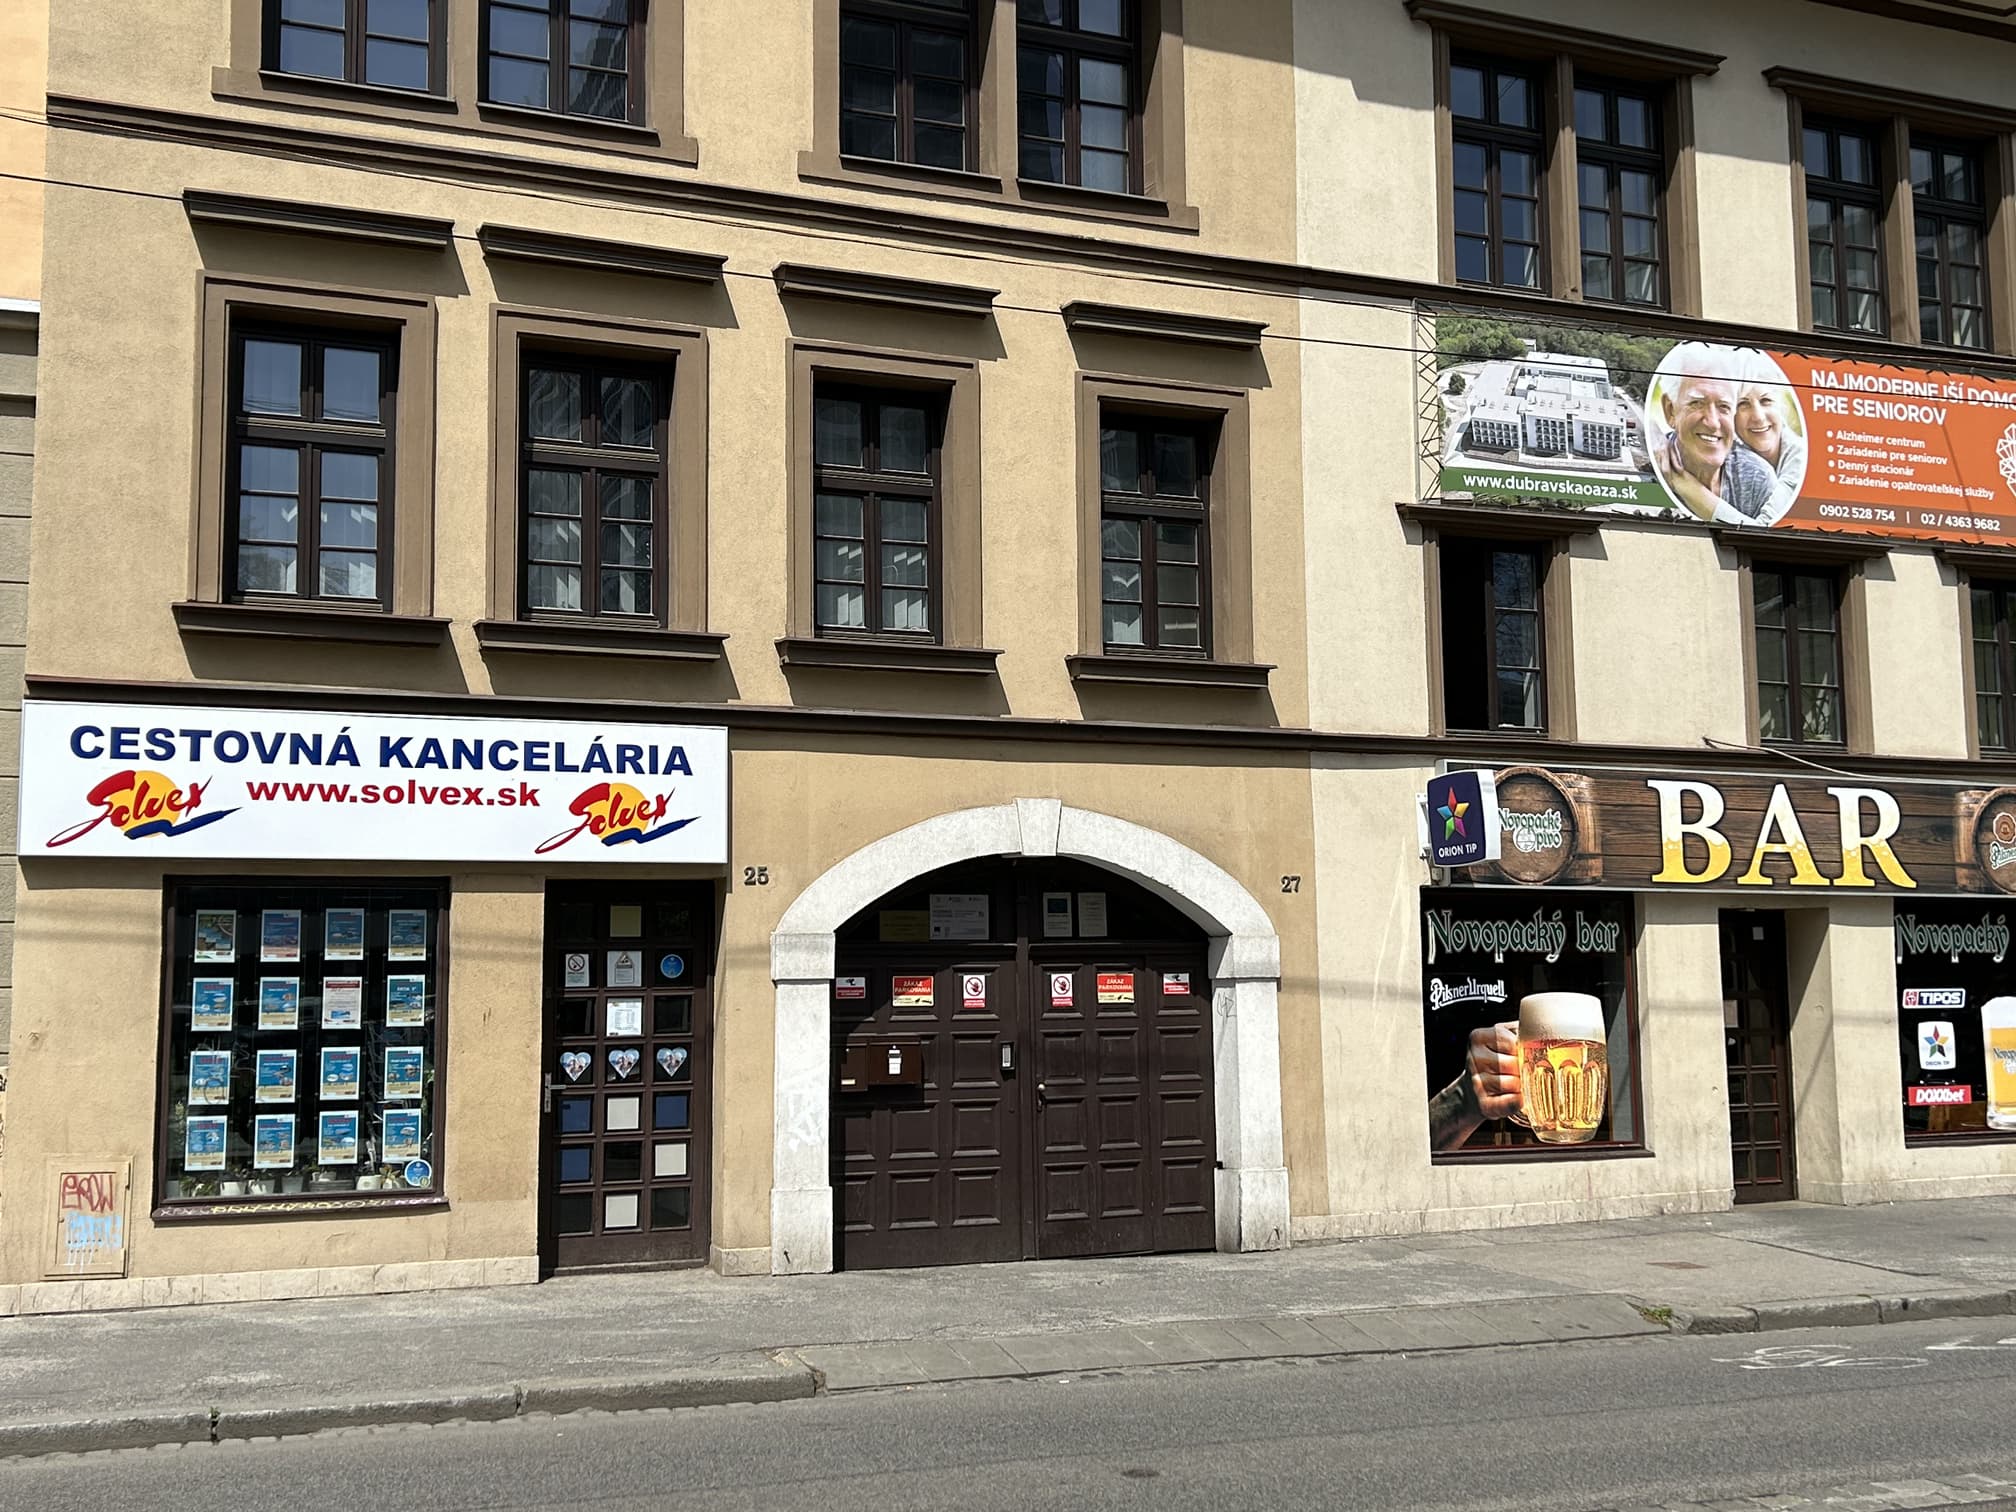 IVPR vchod, foto Špitálska 25, 27, Bratislava